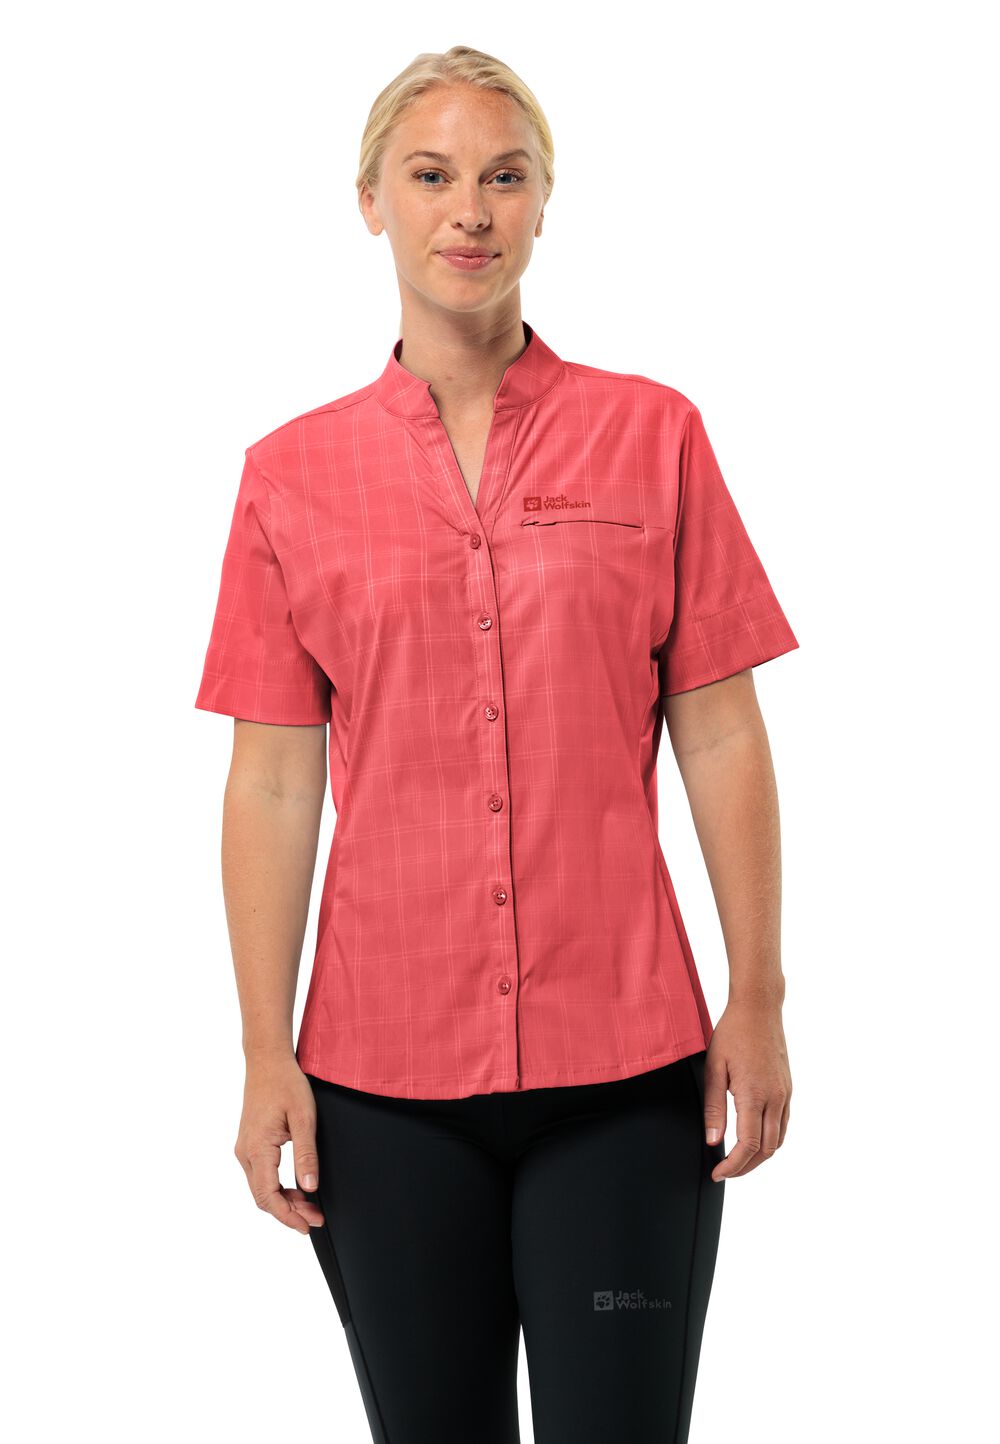 Jack Wolfskin Norbo S S Shirt Women Wandelblouse met korte mouwen Dames L rood vibrant red check